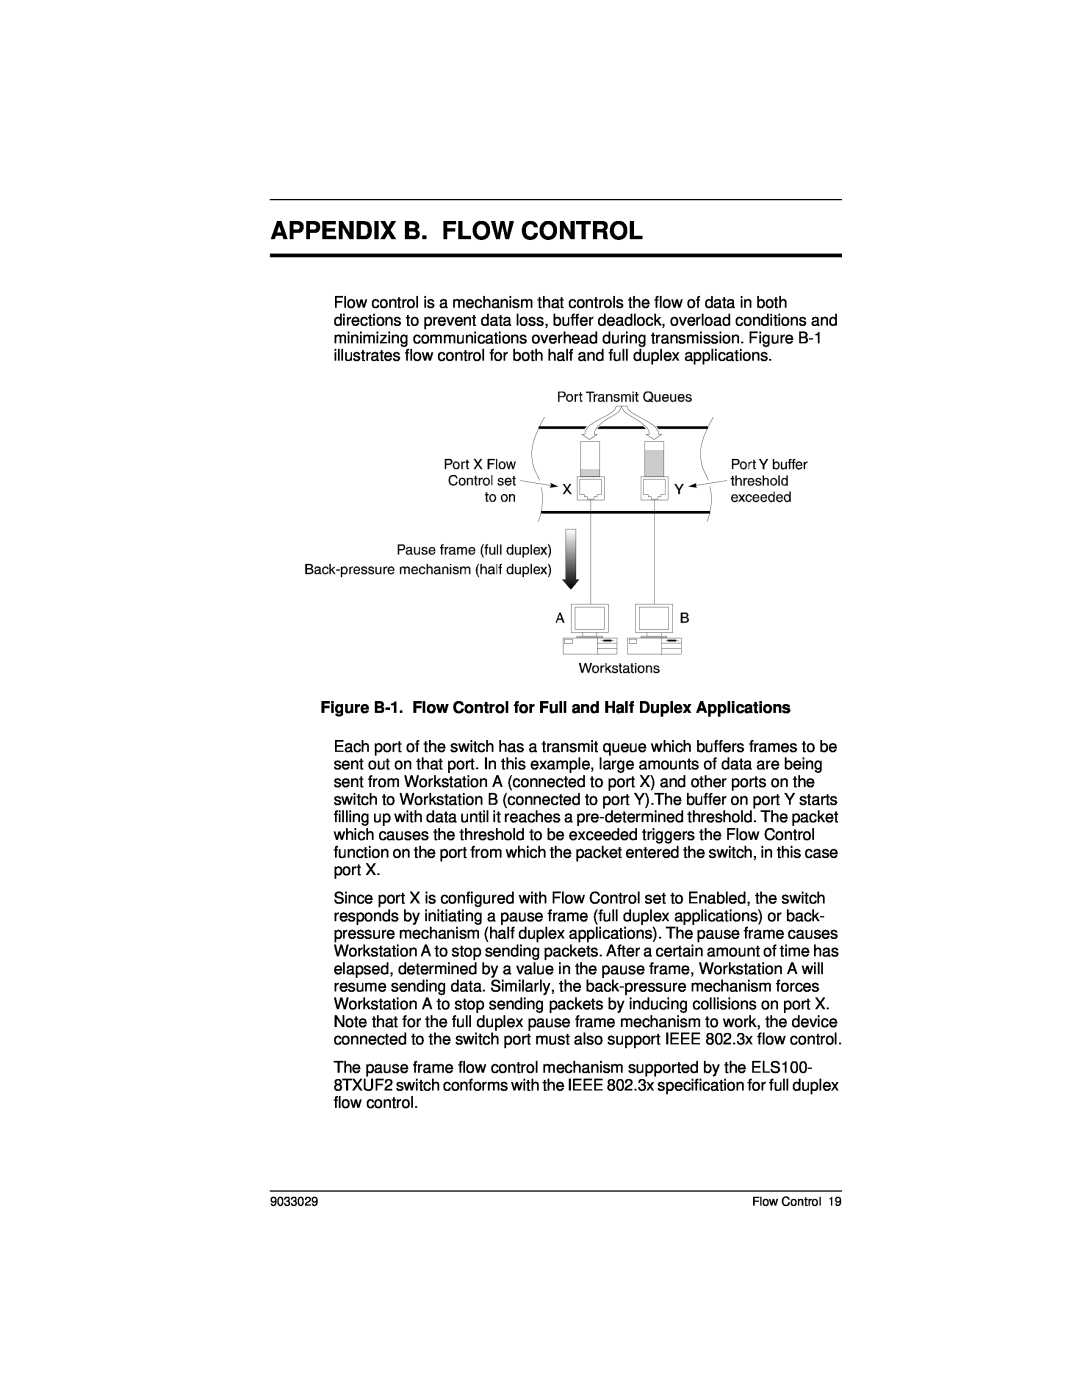 Cabletron Systems ELS100-8TXUF2 Appendix B. Flow Control, Figure B-1. Flow Control for Full and Half Duplex Applications 